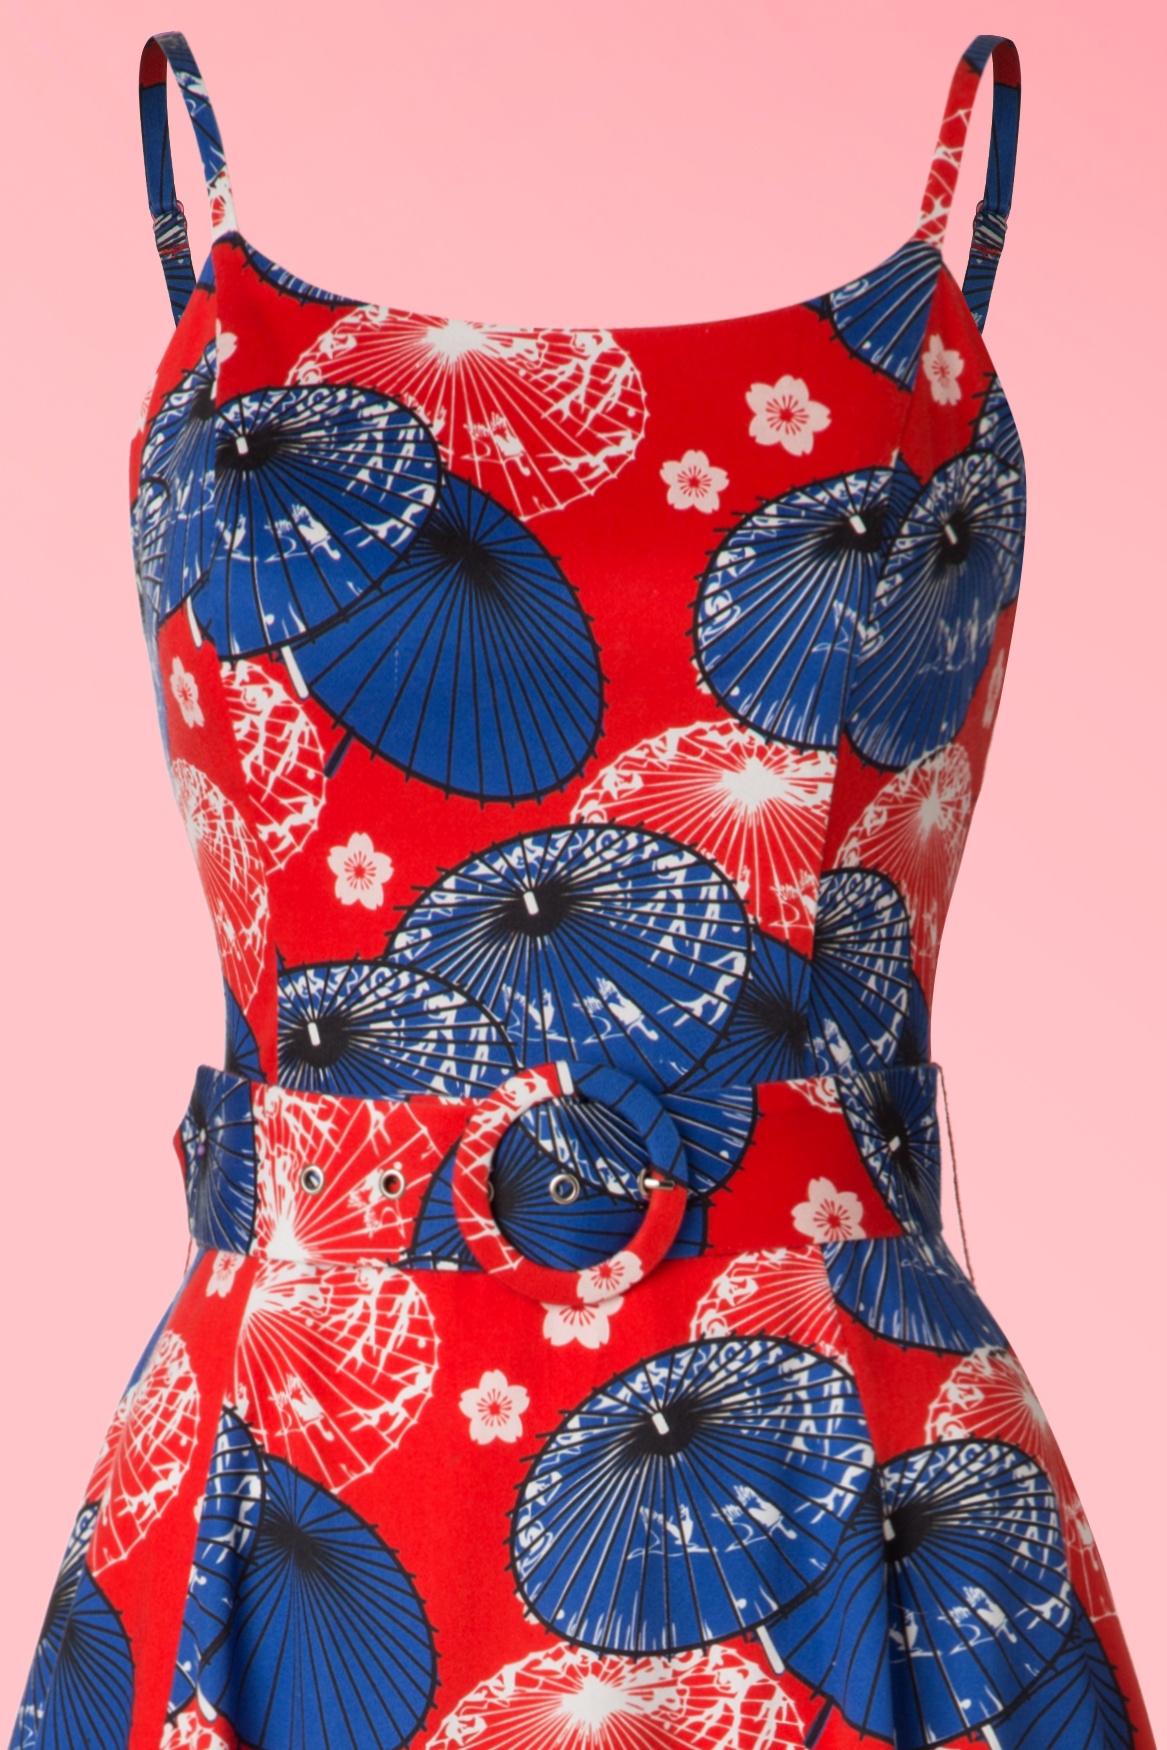 Collectif Clothing - Lilly Japanse parasol-swingjurk in rood en blauw 4